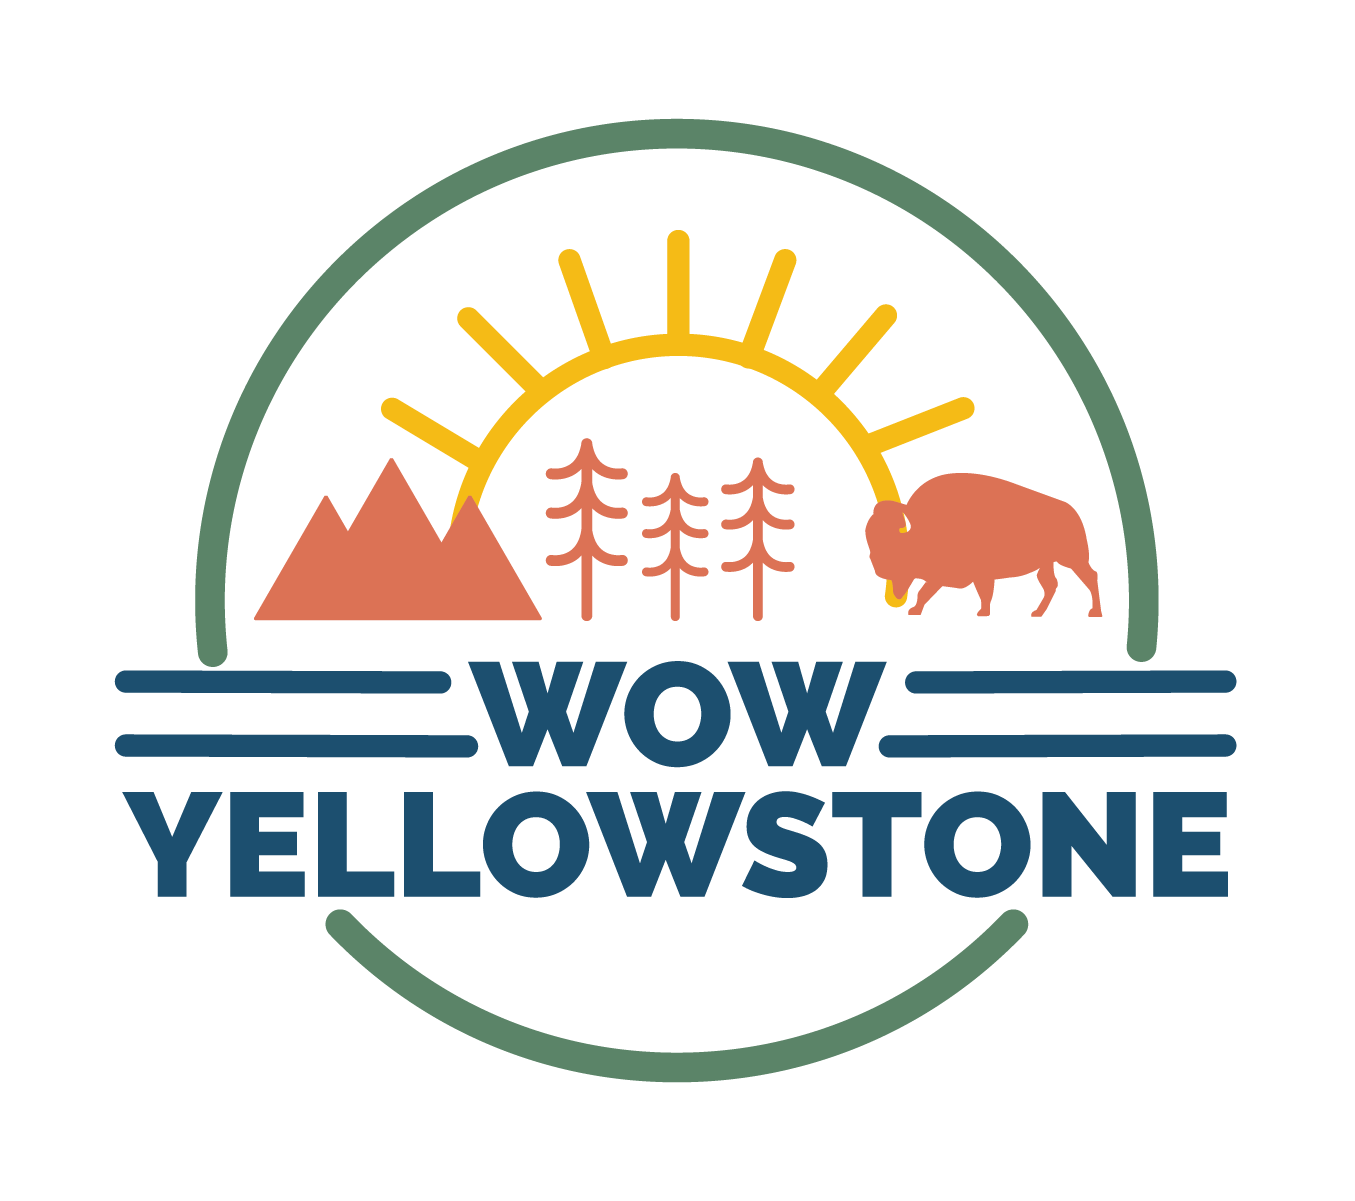 Wow Yellowstone!